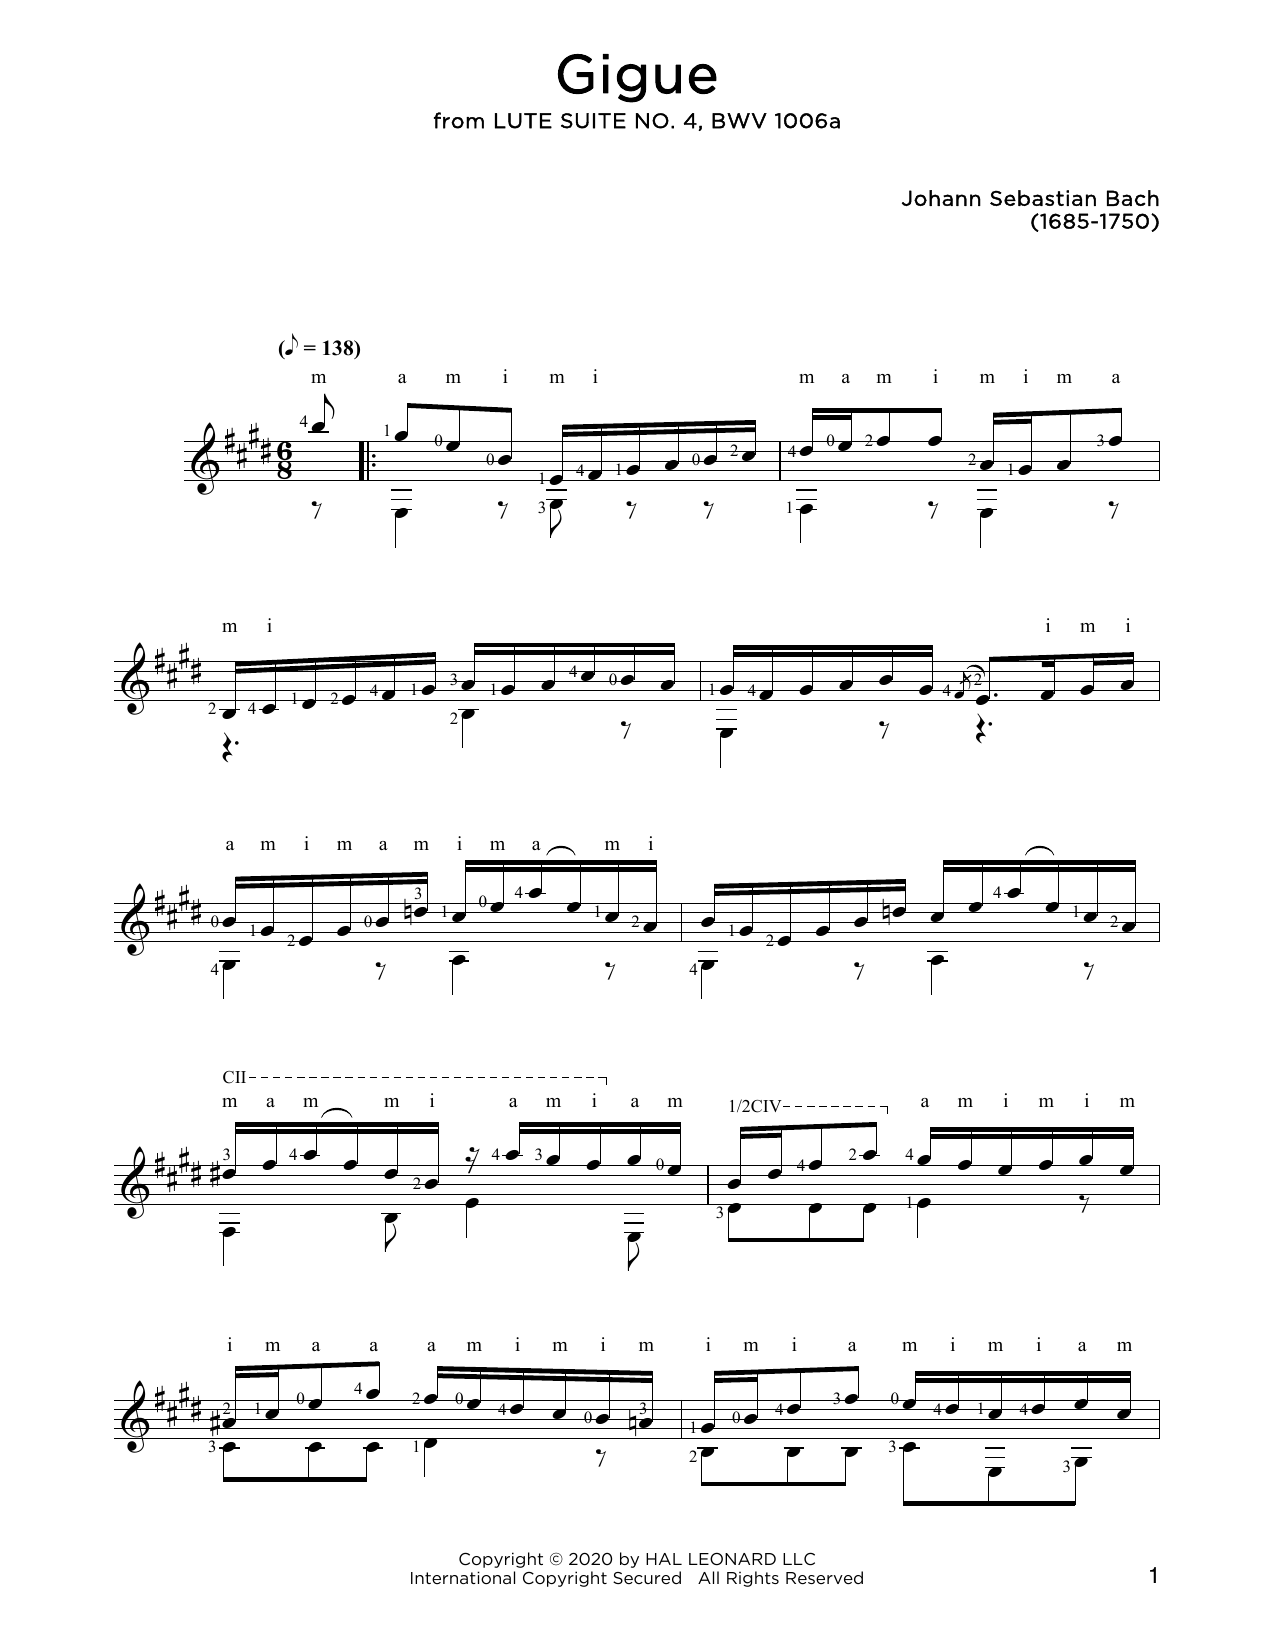 Johann Sebastian Bach Gigue Sheet Music Notes & Chords for Solo Guitar - Download or Print PDF